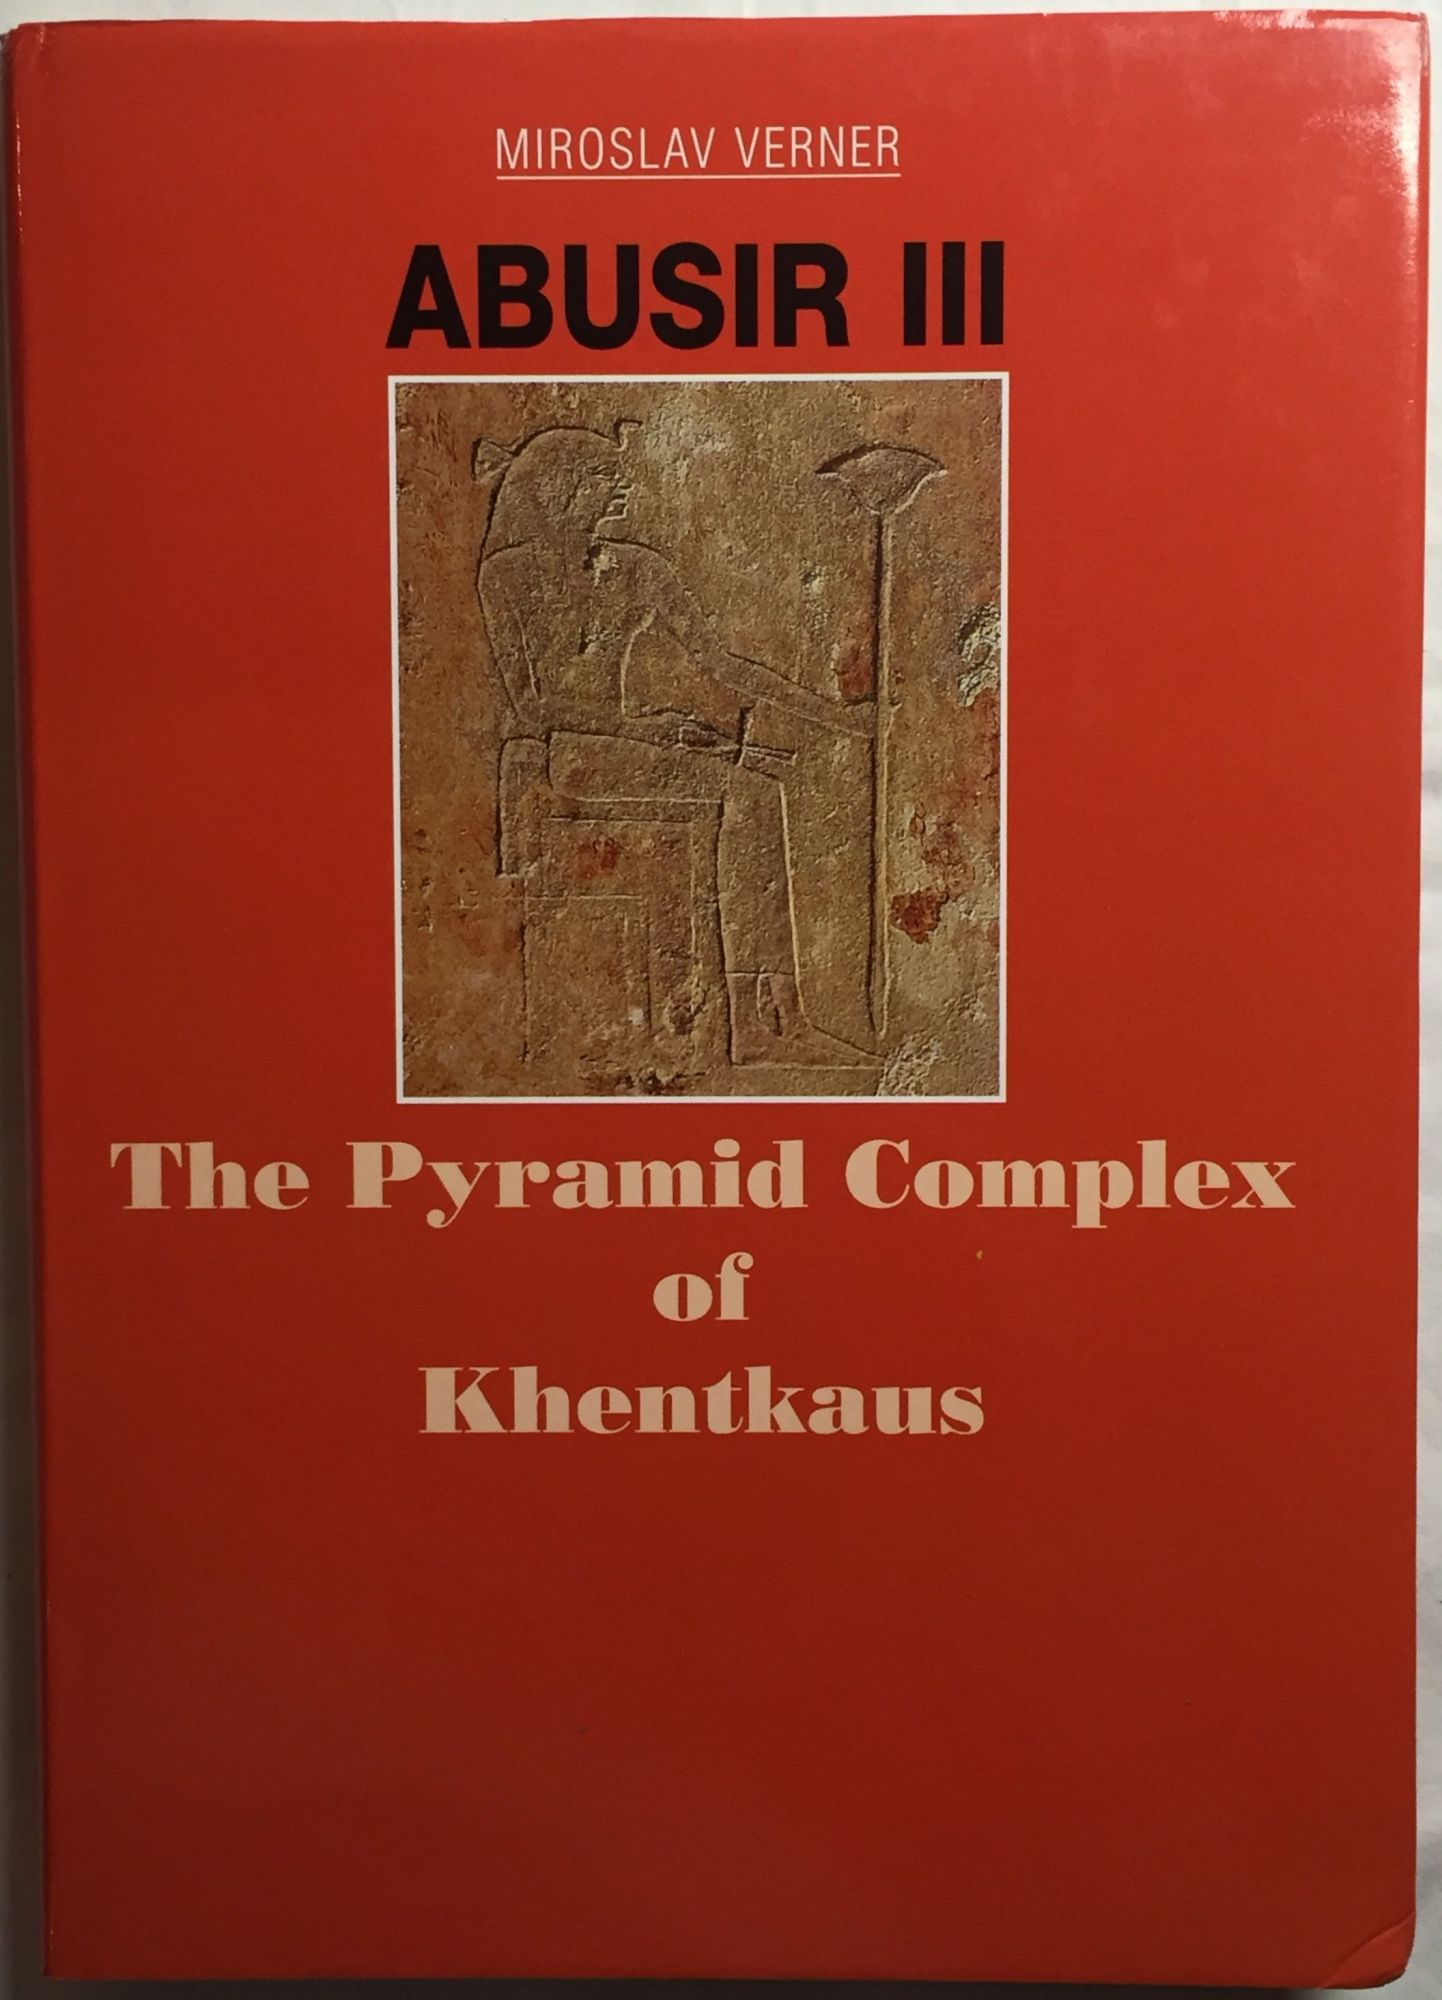 Abusir III: The pyramid complex of Khentkaus - VERNER Miroslav - POSENER-KRIEGER Paule - JÁNOSI Peter